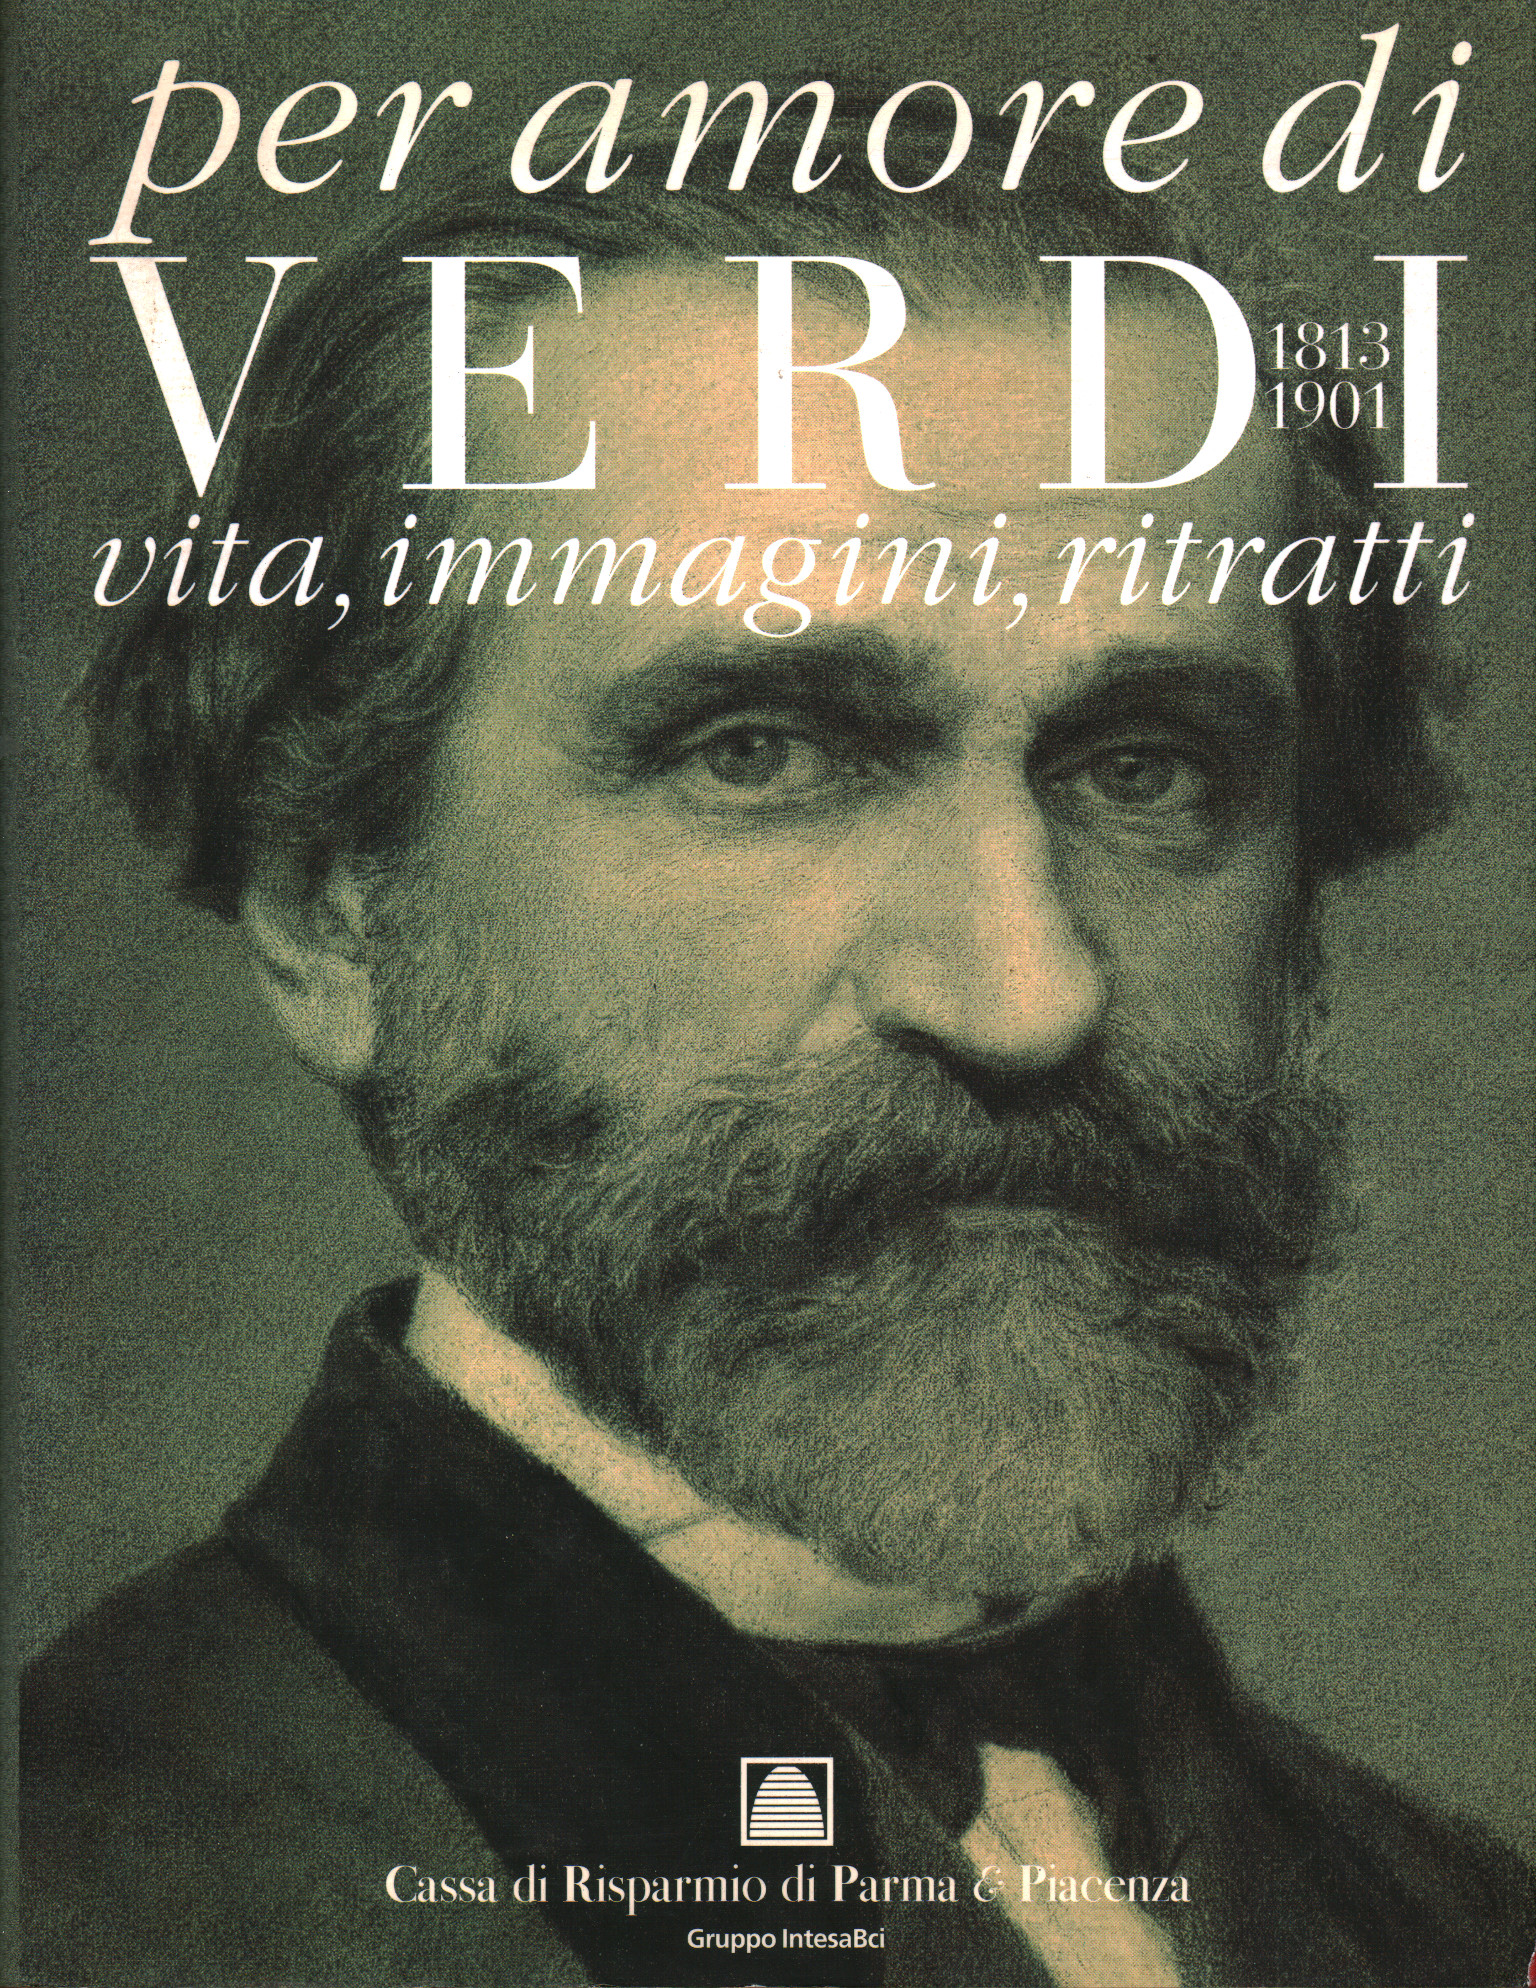 For the love of Verdi 1813-1901, Marco Marica